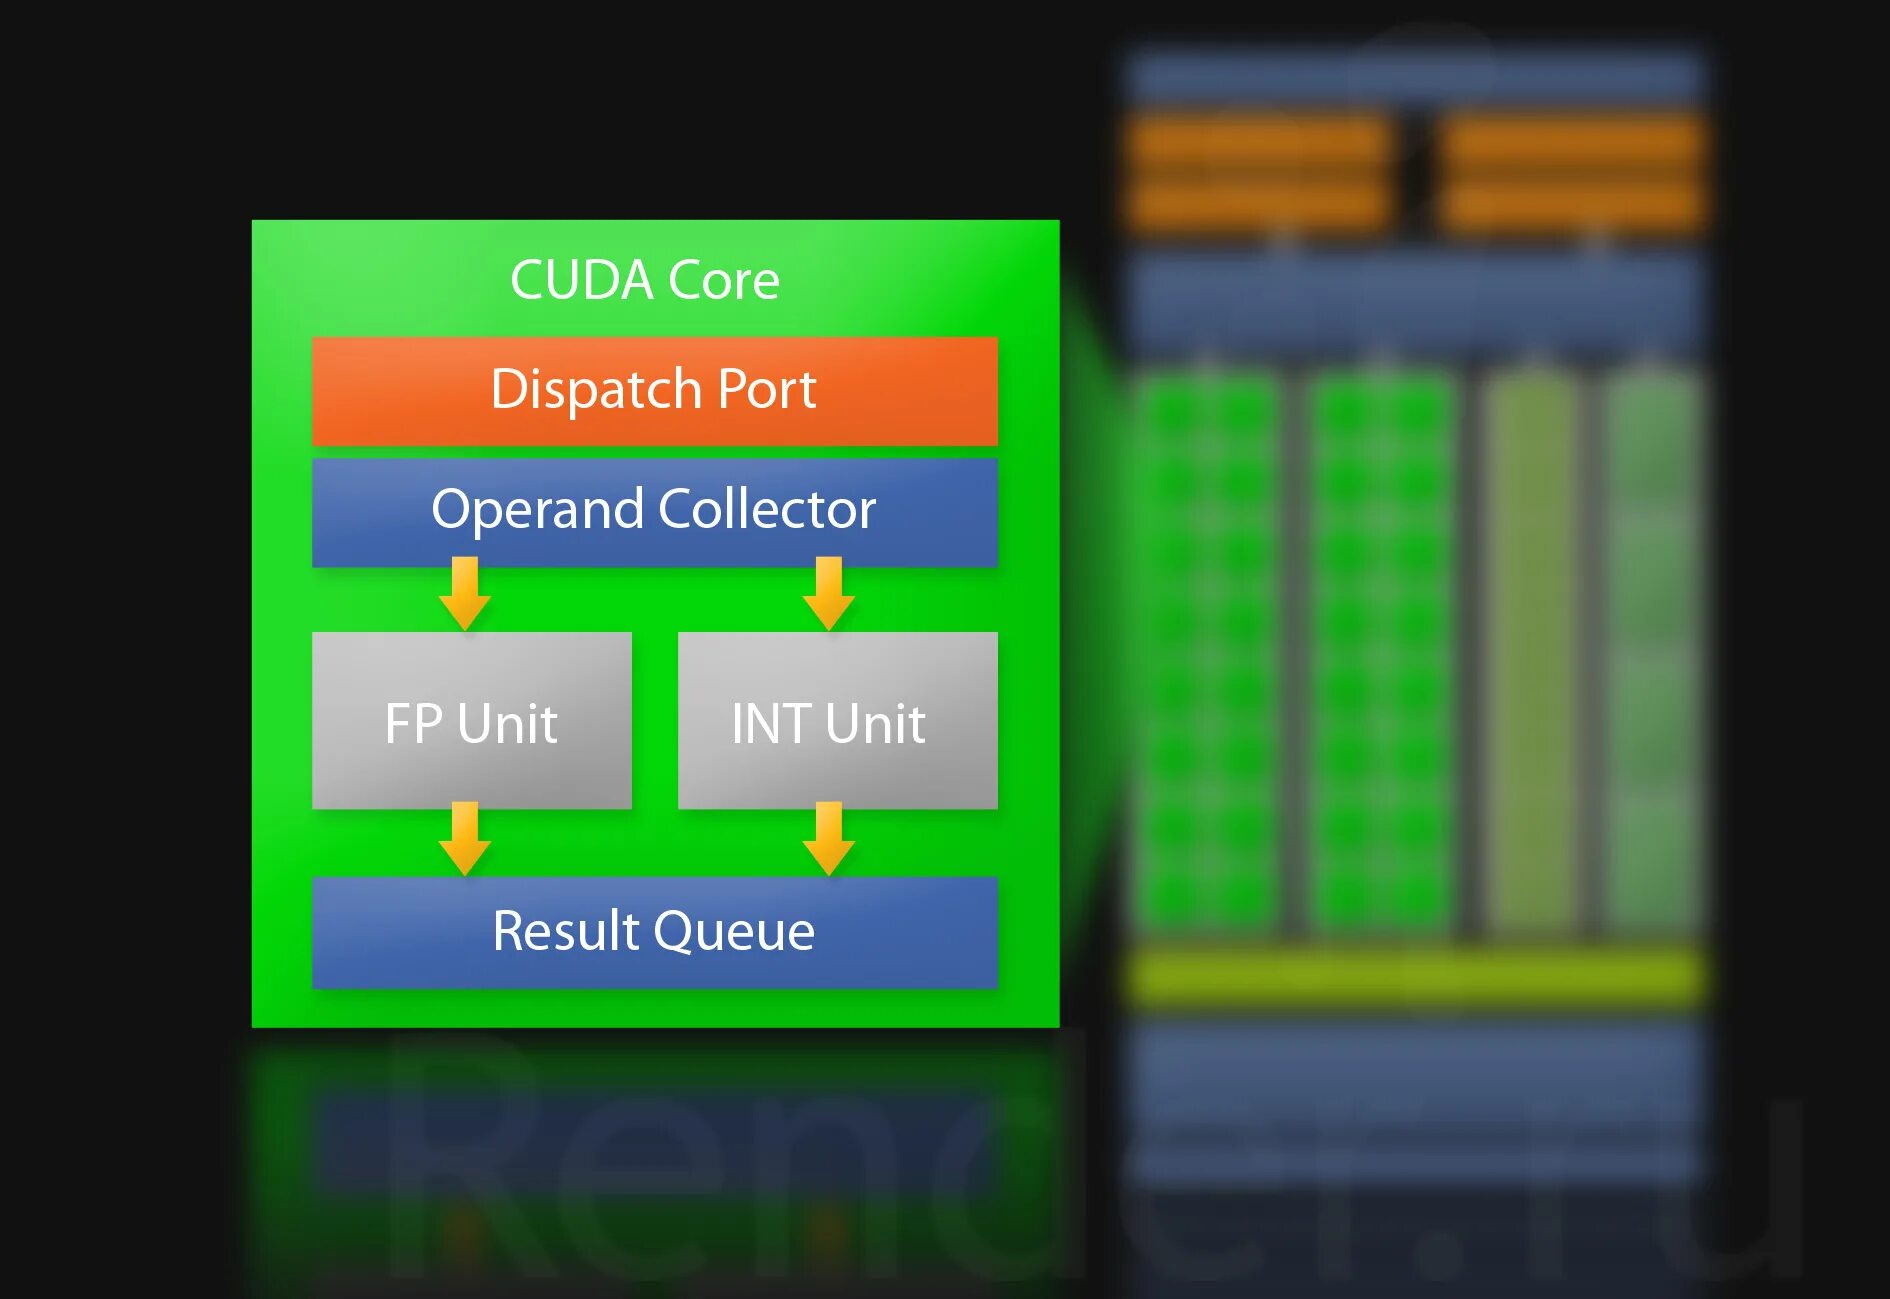 CUDA ядра. CUDA графические процессоры что это. CUDA ядра в видеокартах. CUDA ядра график. Rtx ядра cuda